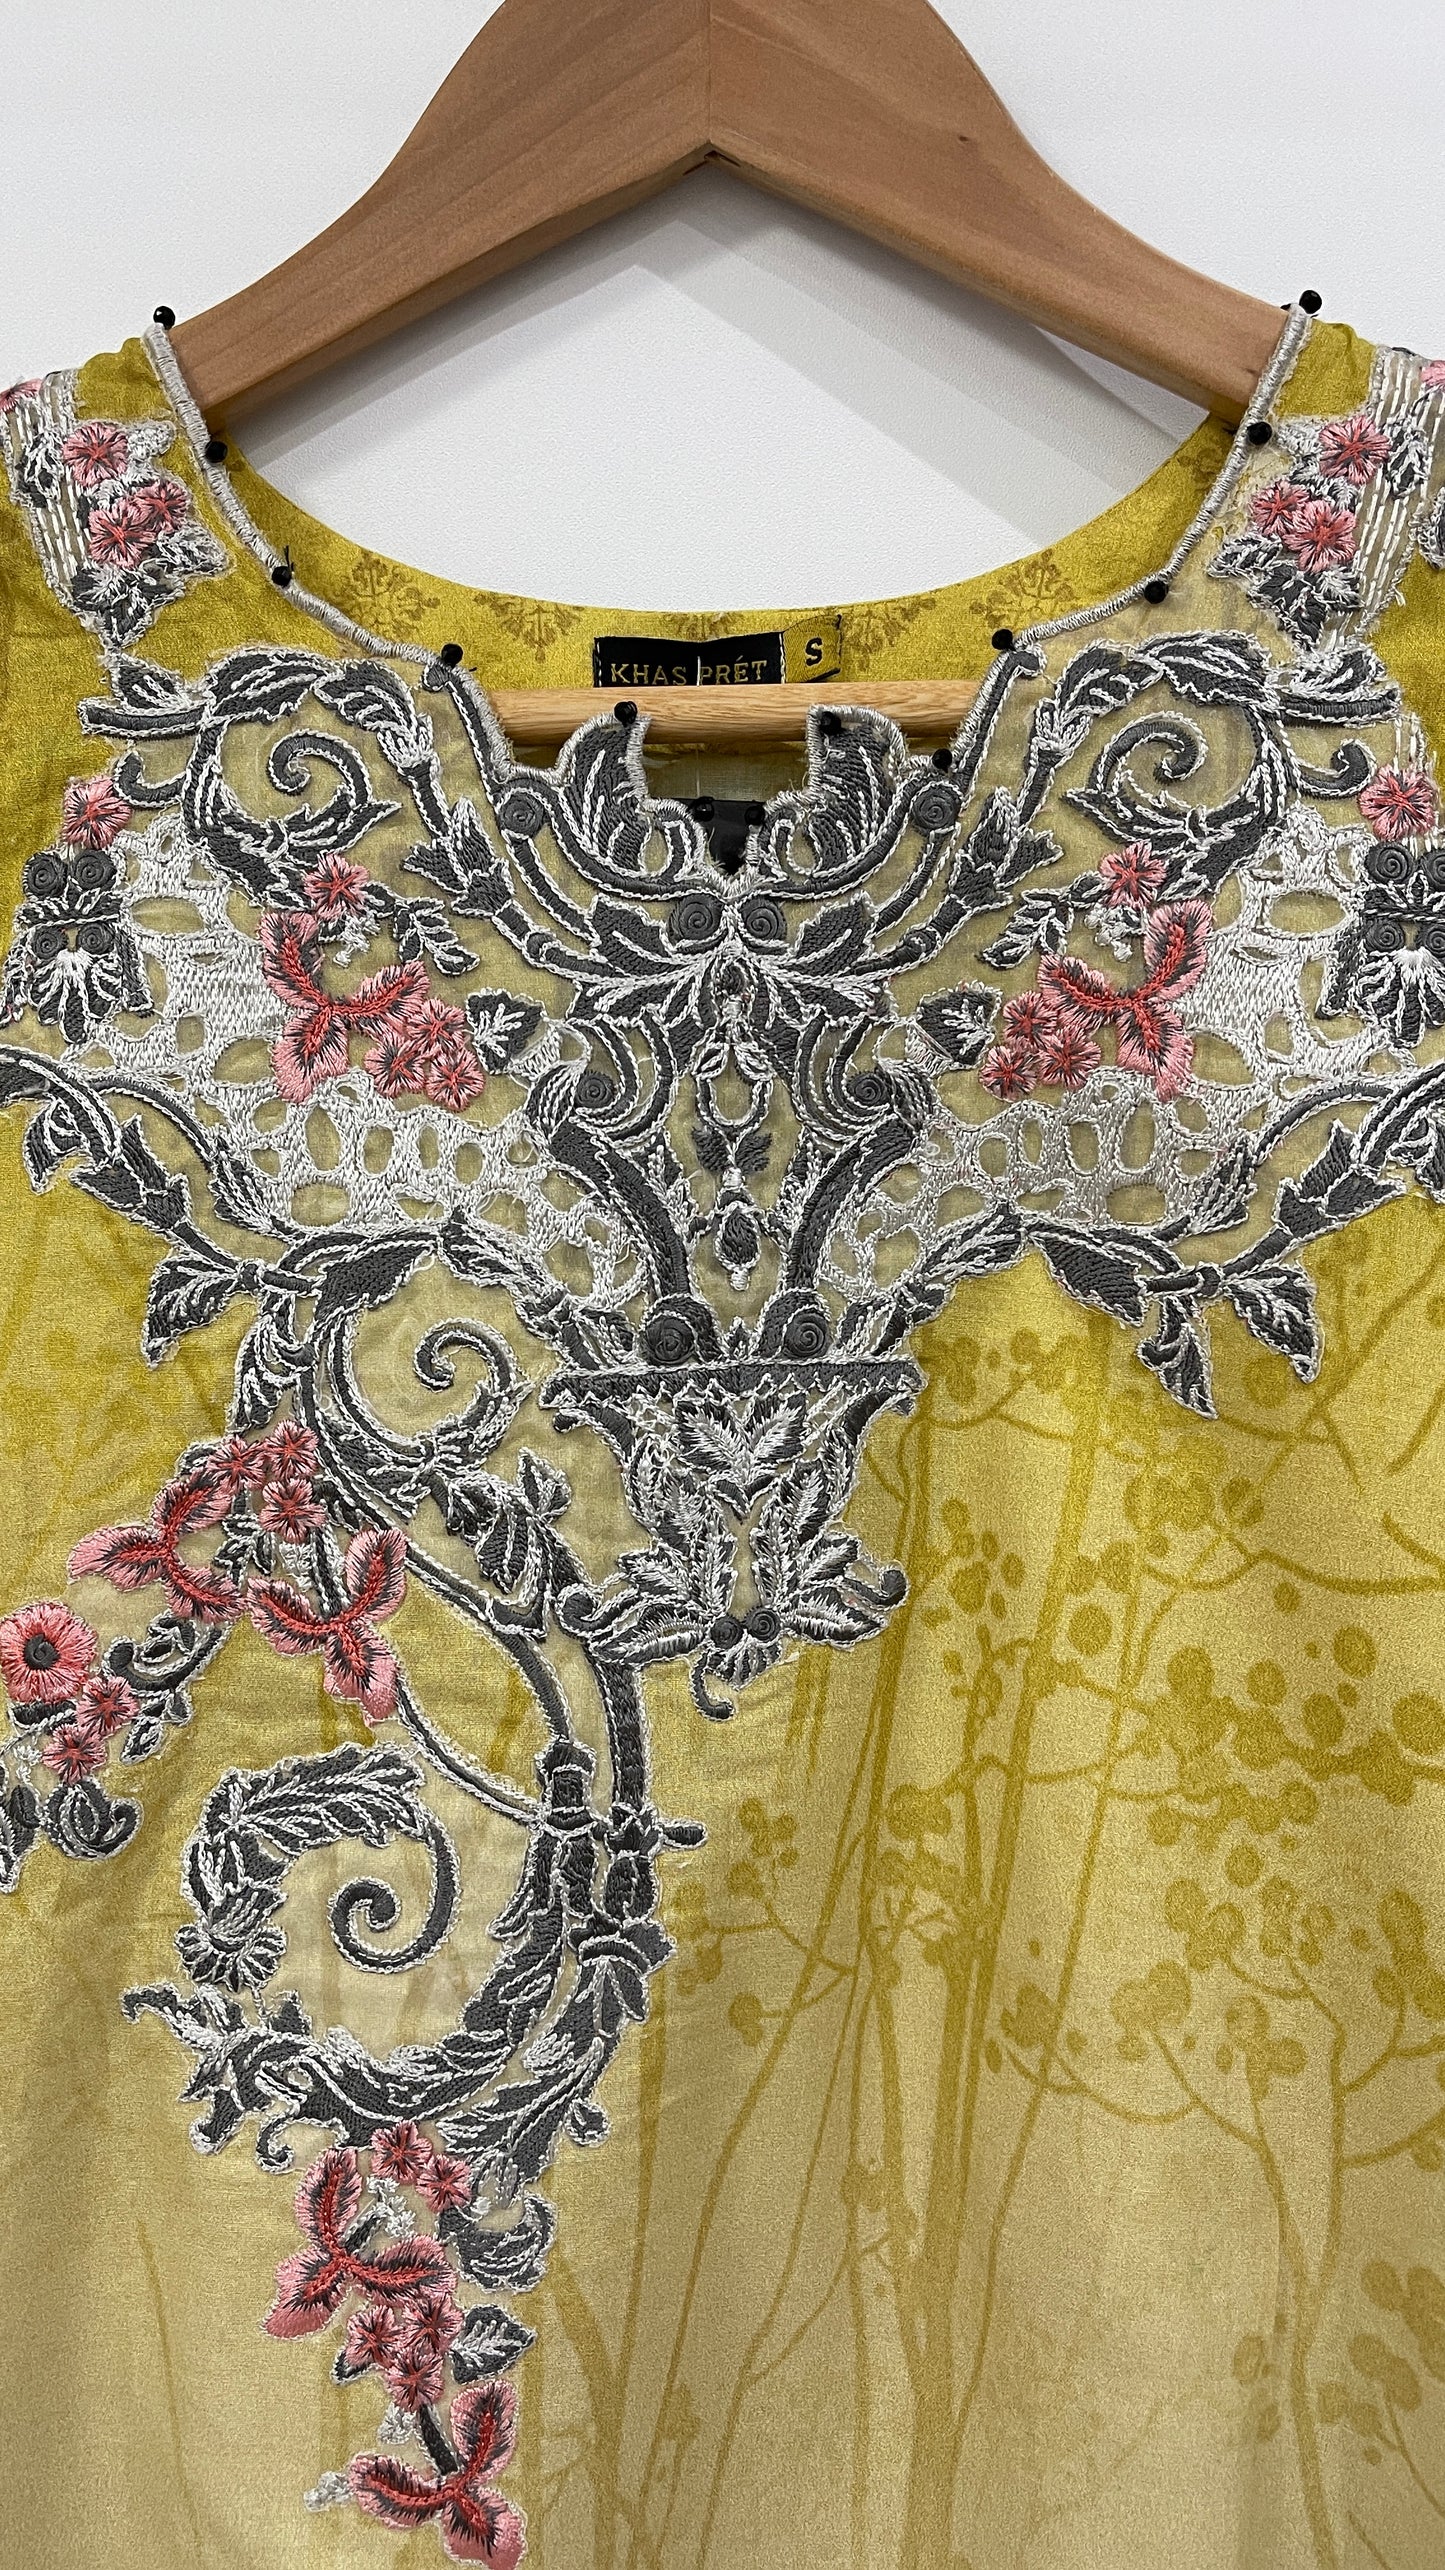 Original KHAS 3 Piece Stitched Yellow and Black Luxury Lawn Suit with Chiffon Dupatta